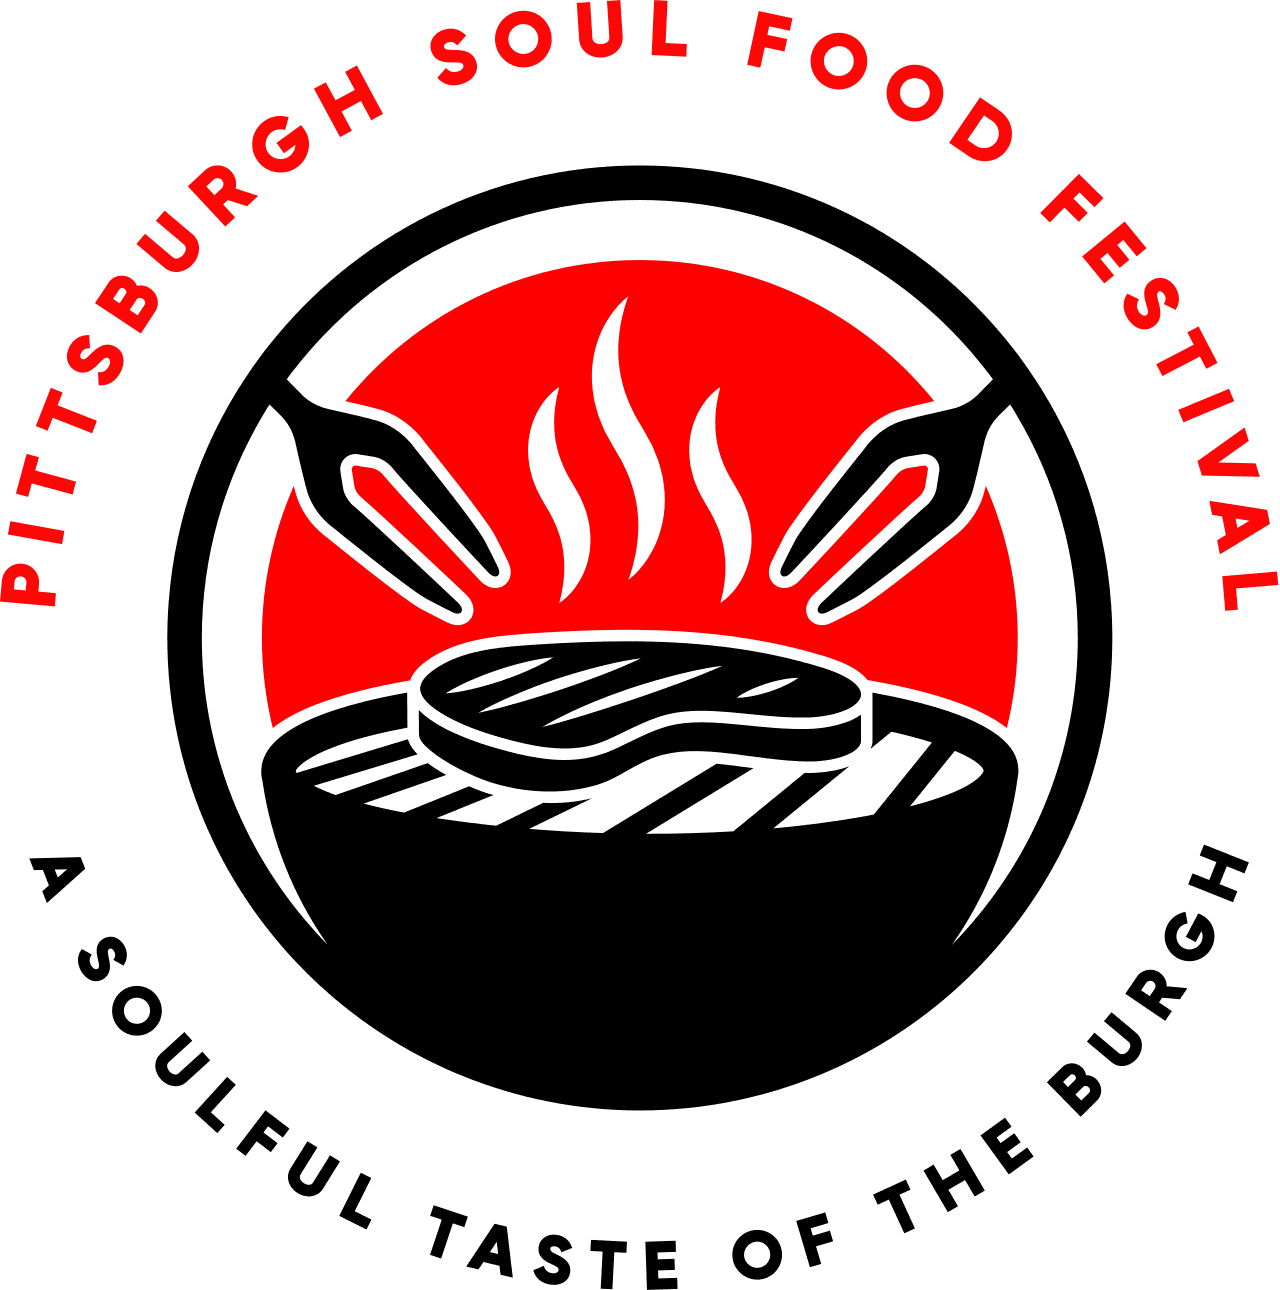 Pittsburgh Soul Food Festival